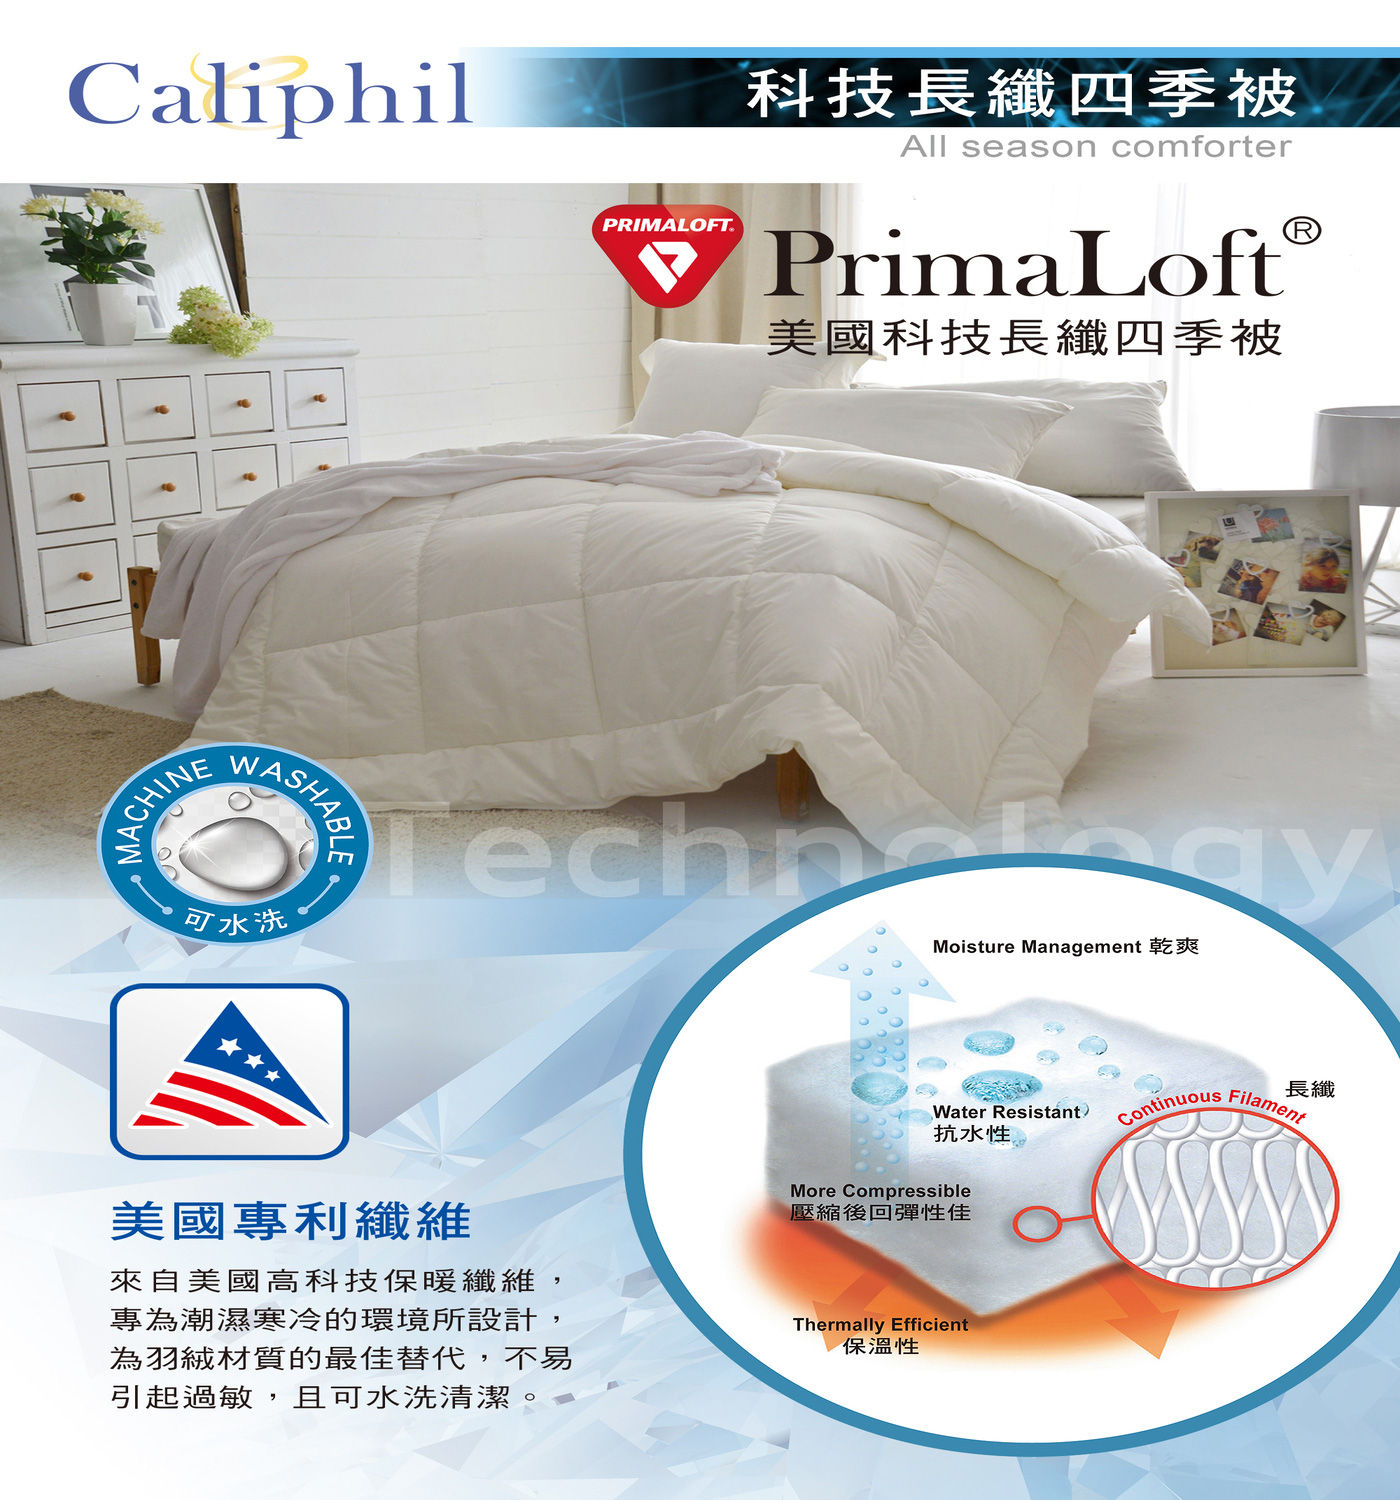 Caliphil PrimaLoft 雙人科技長纖四季被 美國專利纖維